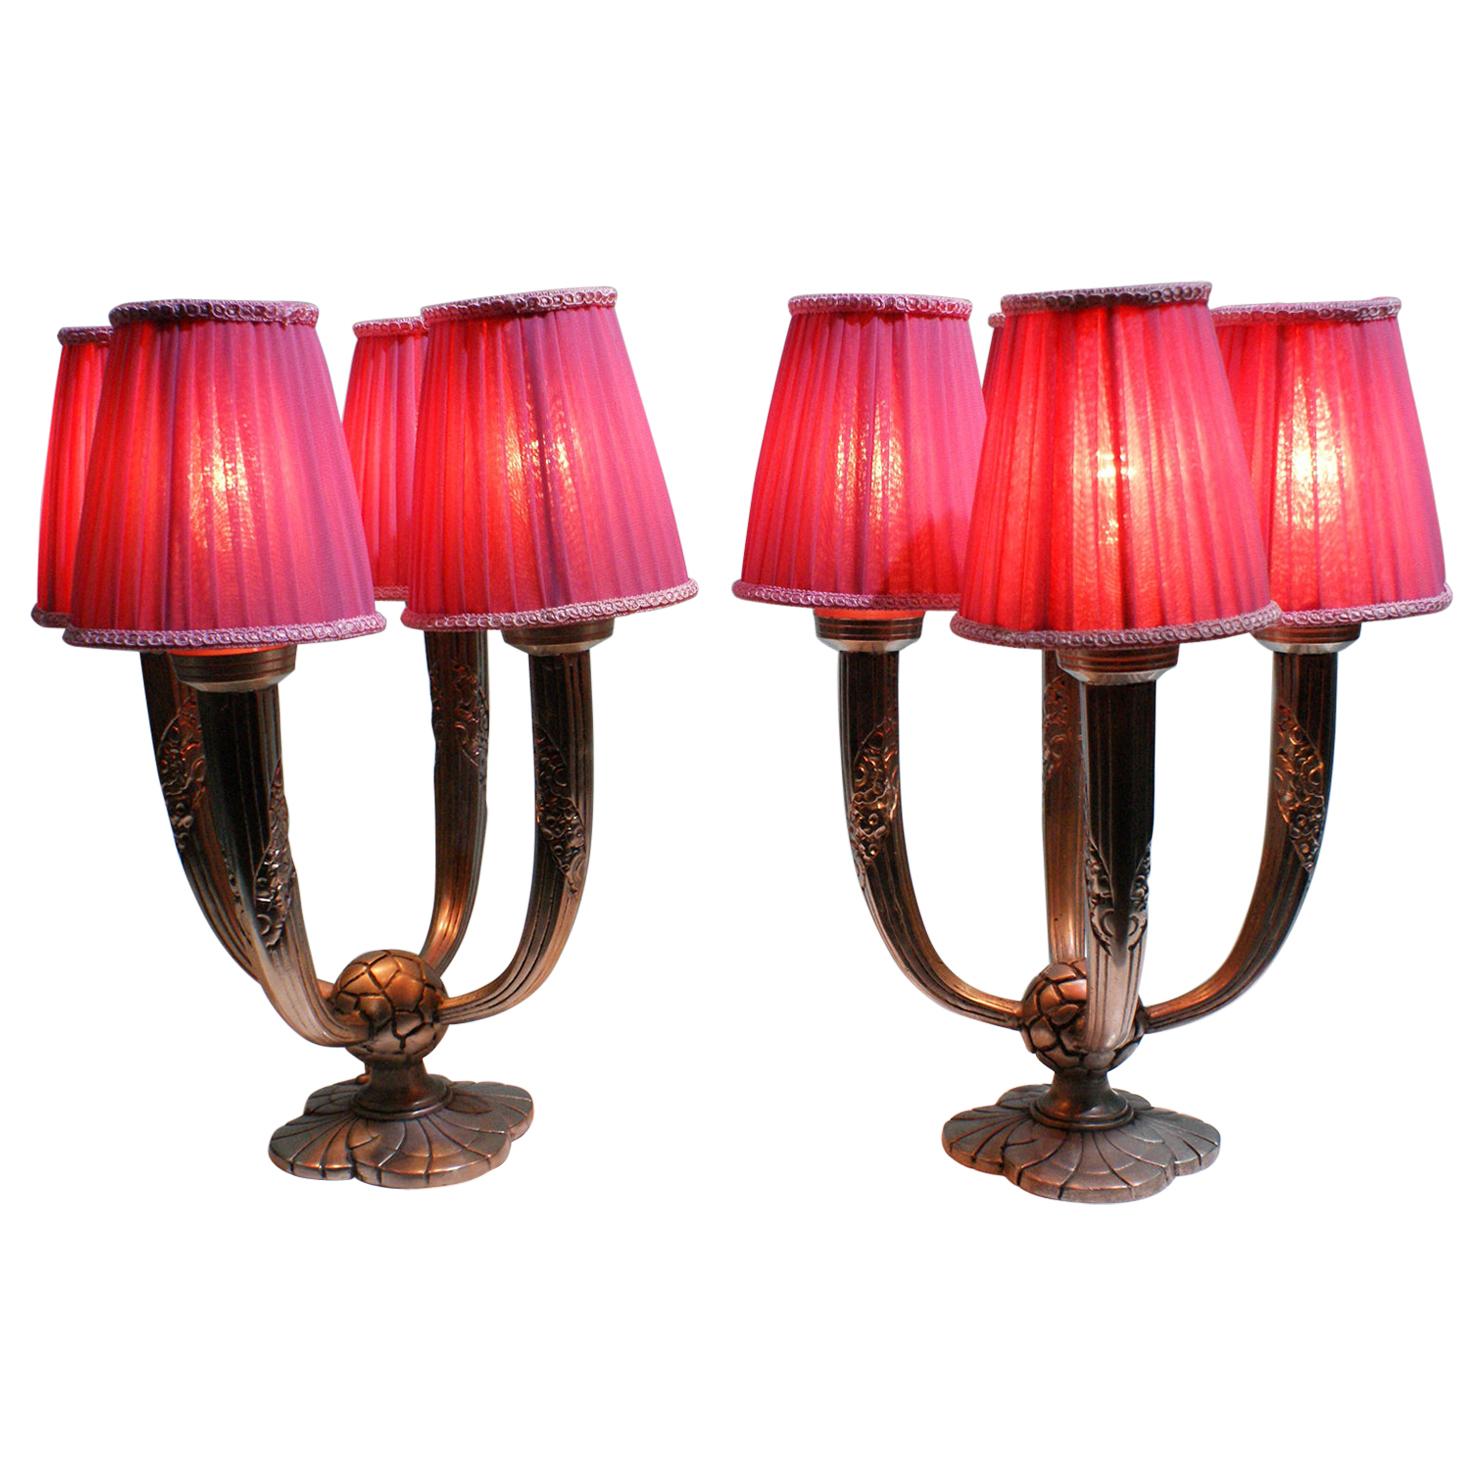 Pair of Elegant Art Deco Table Lamp Signed “Limousin” 'Maker' For Sale